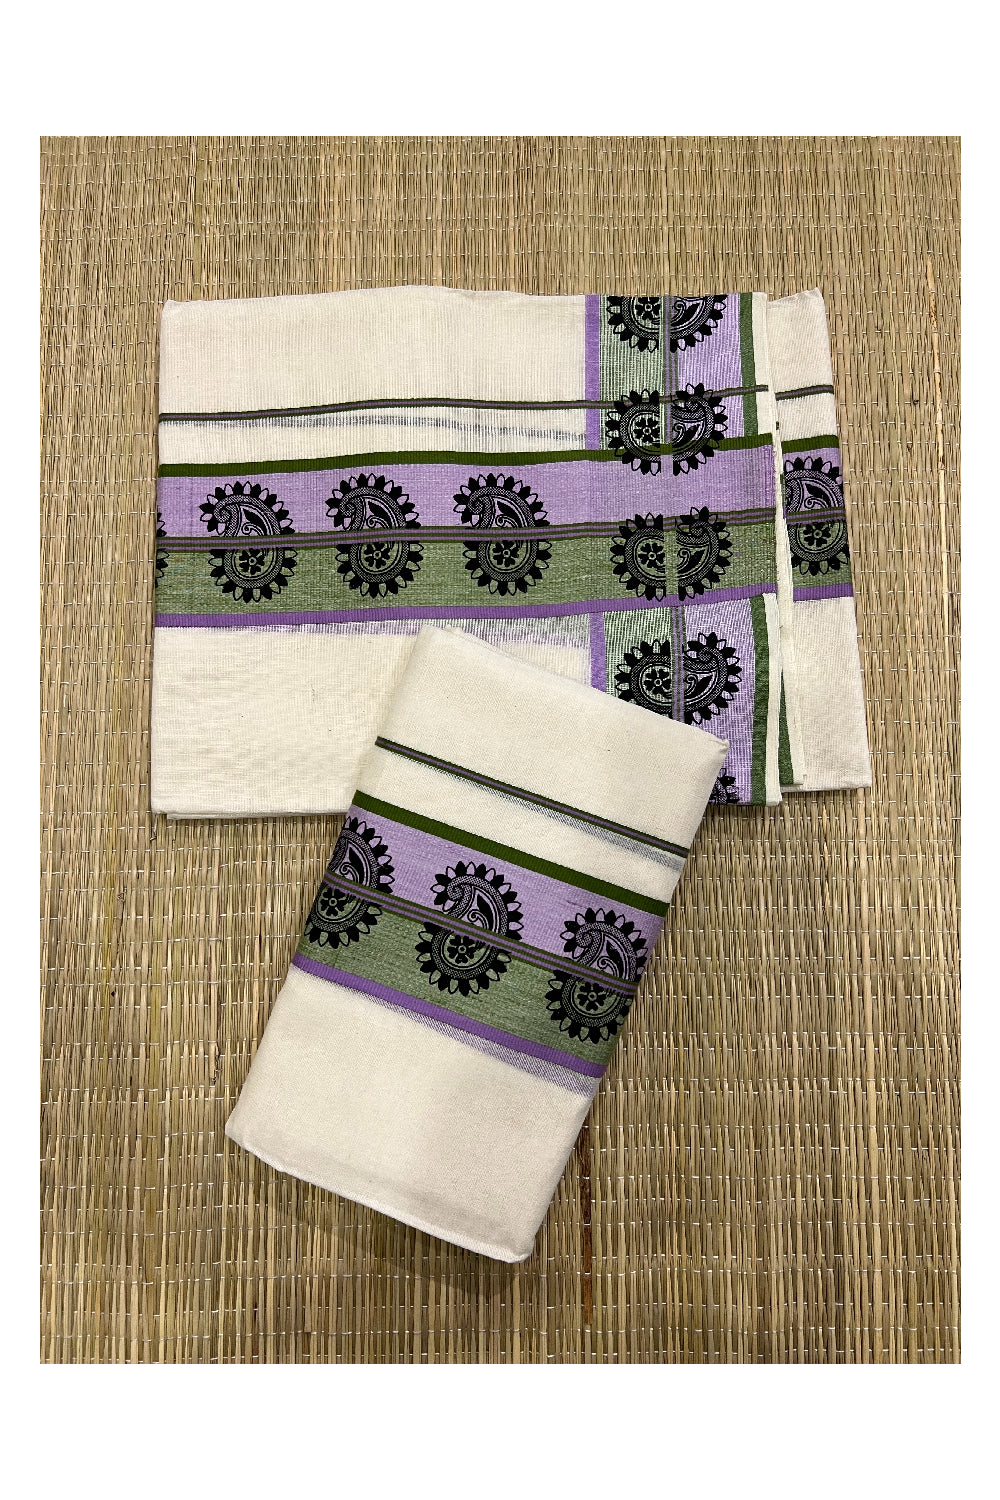 Kerala Cotton Set Mundu (Mundum Neriyathum) with Olive Green Violet Paisley Block Prints on Border